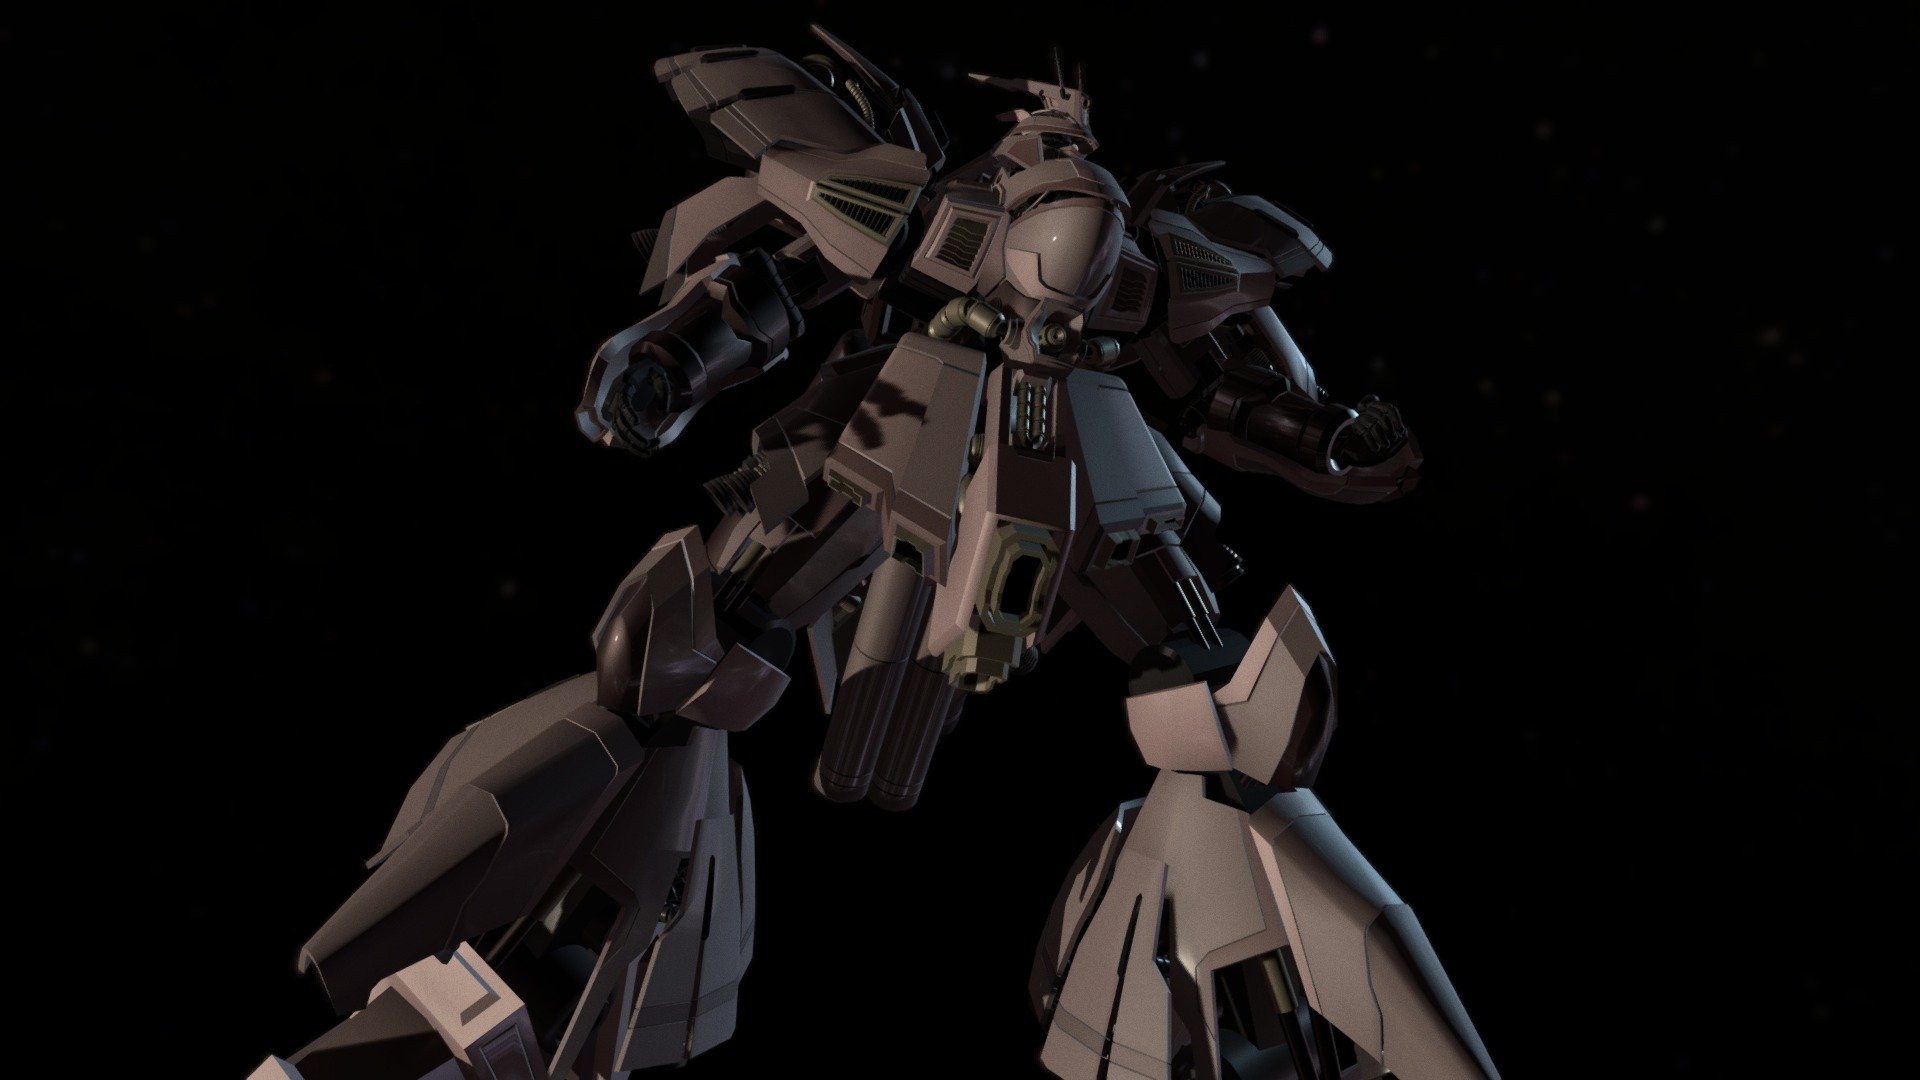 A quick entry for the SAZABI MSN-04 3D Editor Challenge

Based on &ldquo;SAZABI MSN-04 Gundam